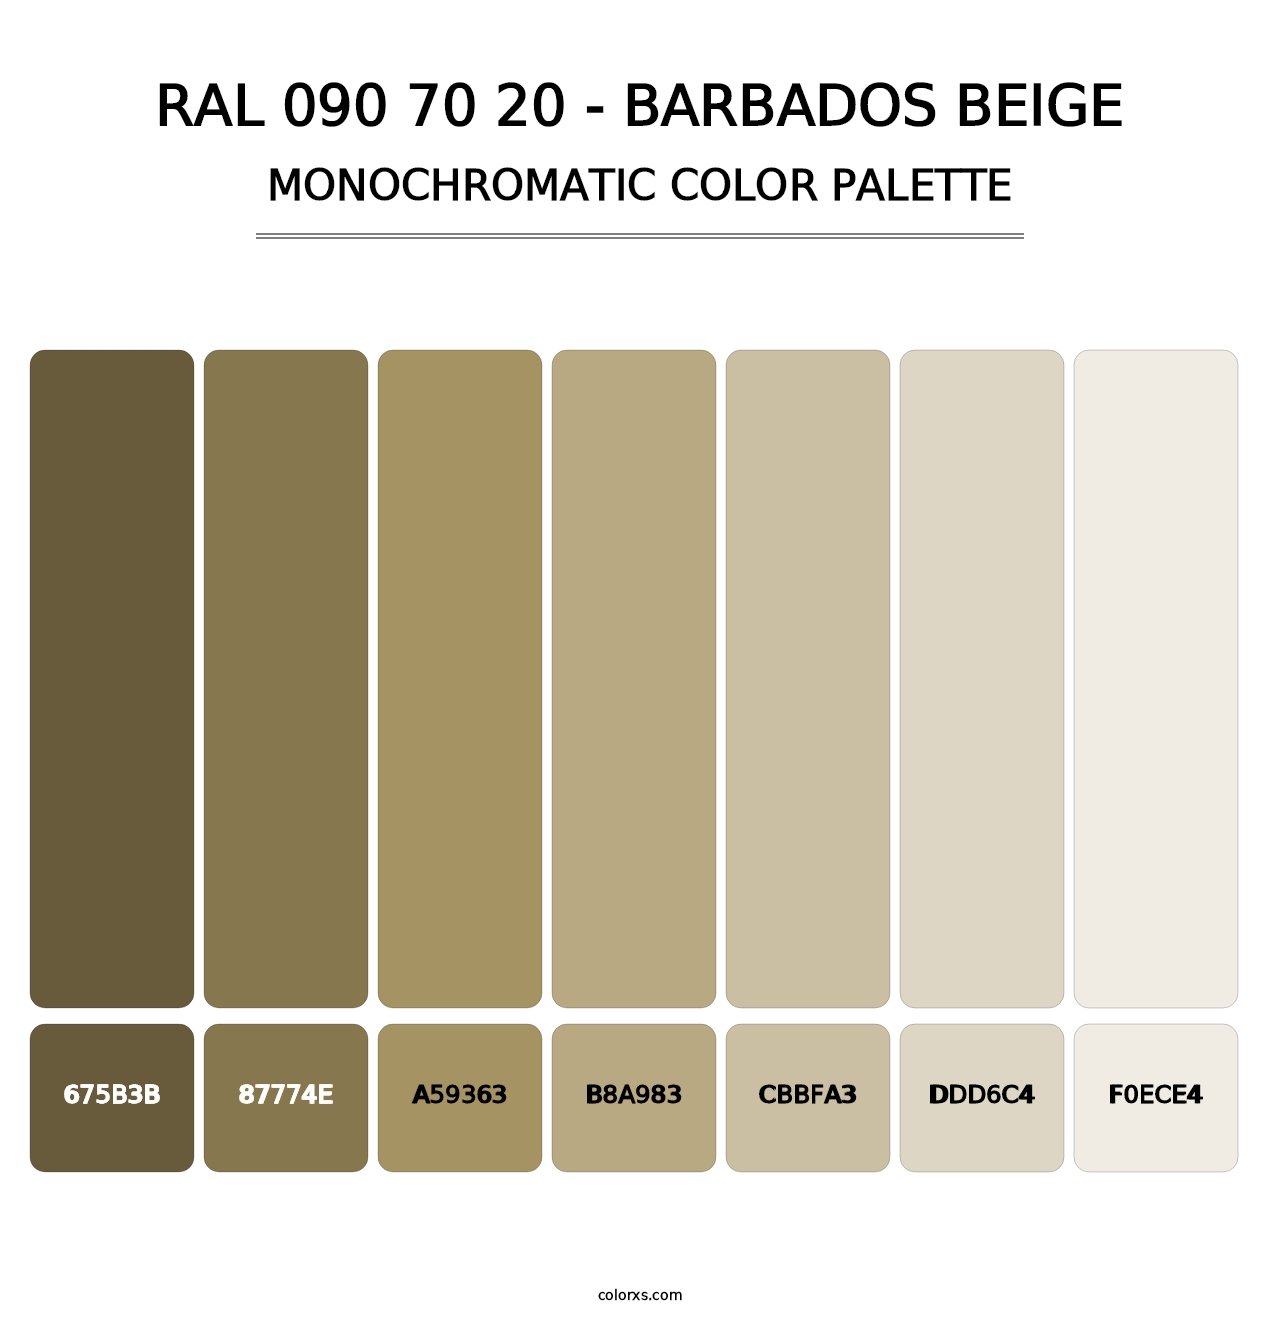 RAL 090 70 20 - Barbados Beige - Monochromatic Color Palette